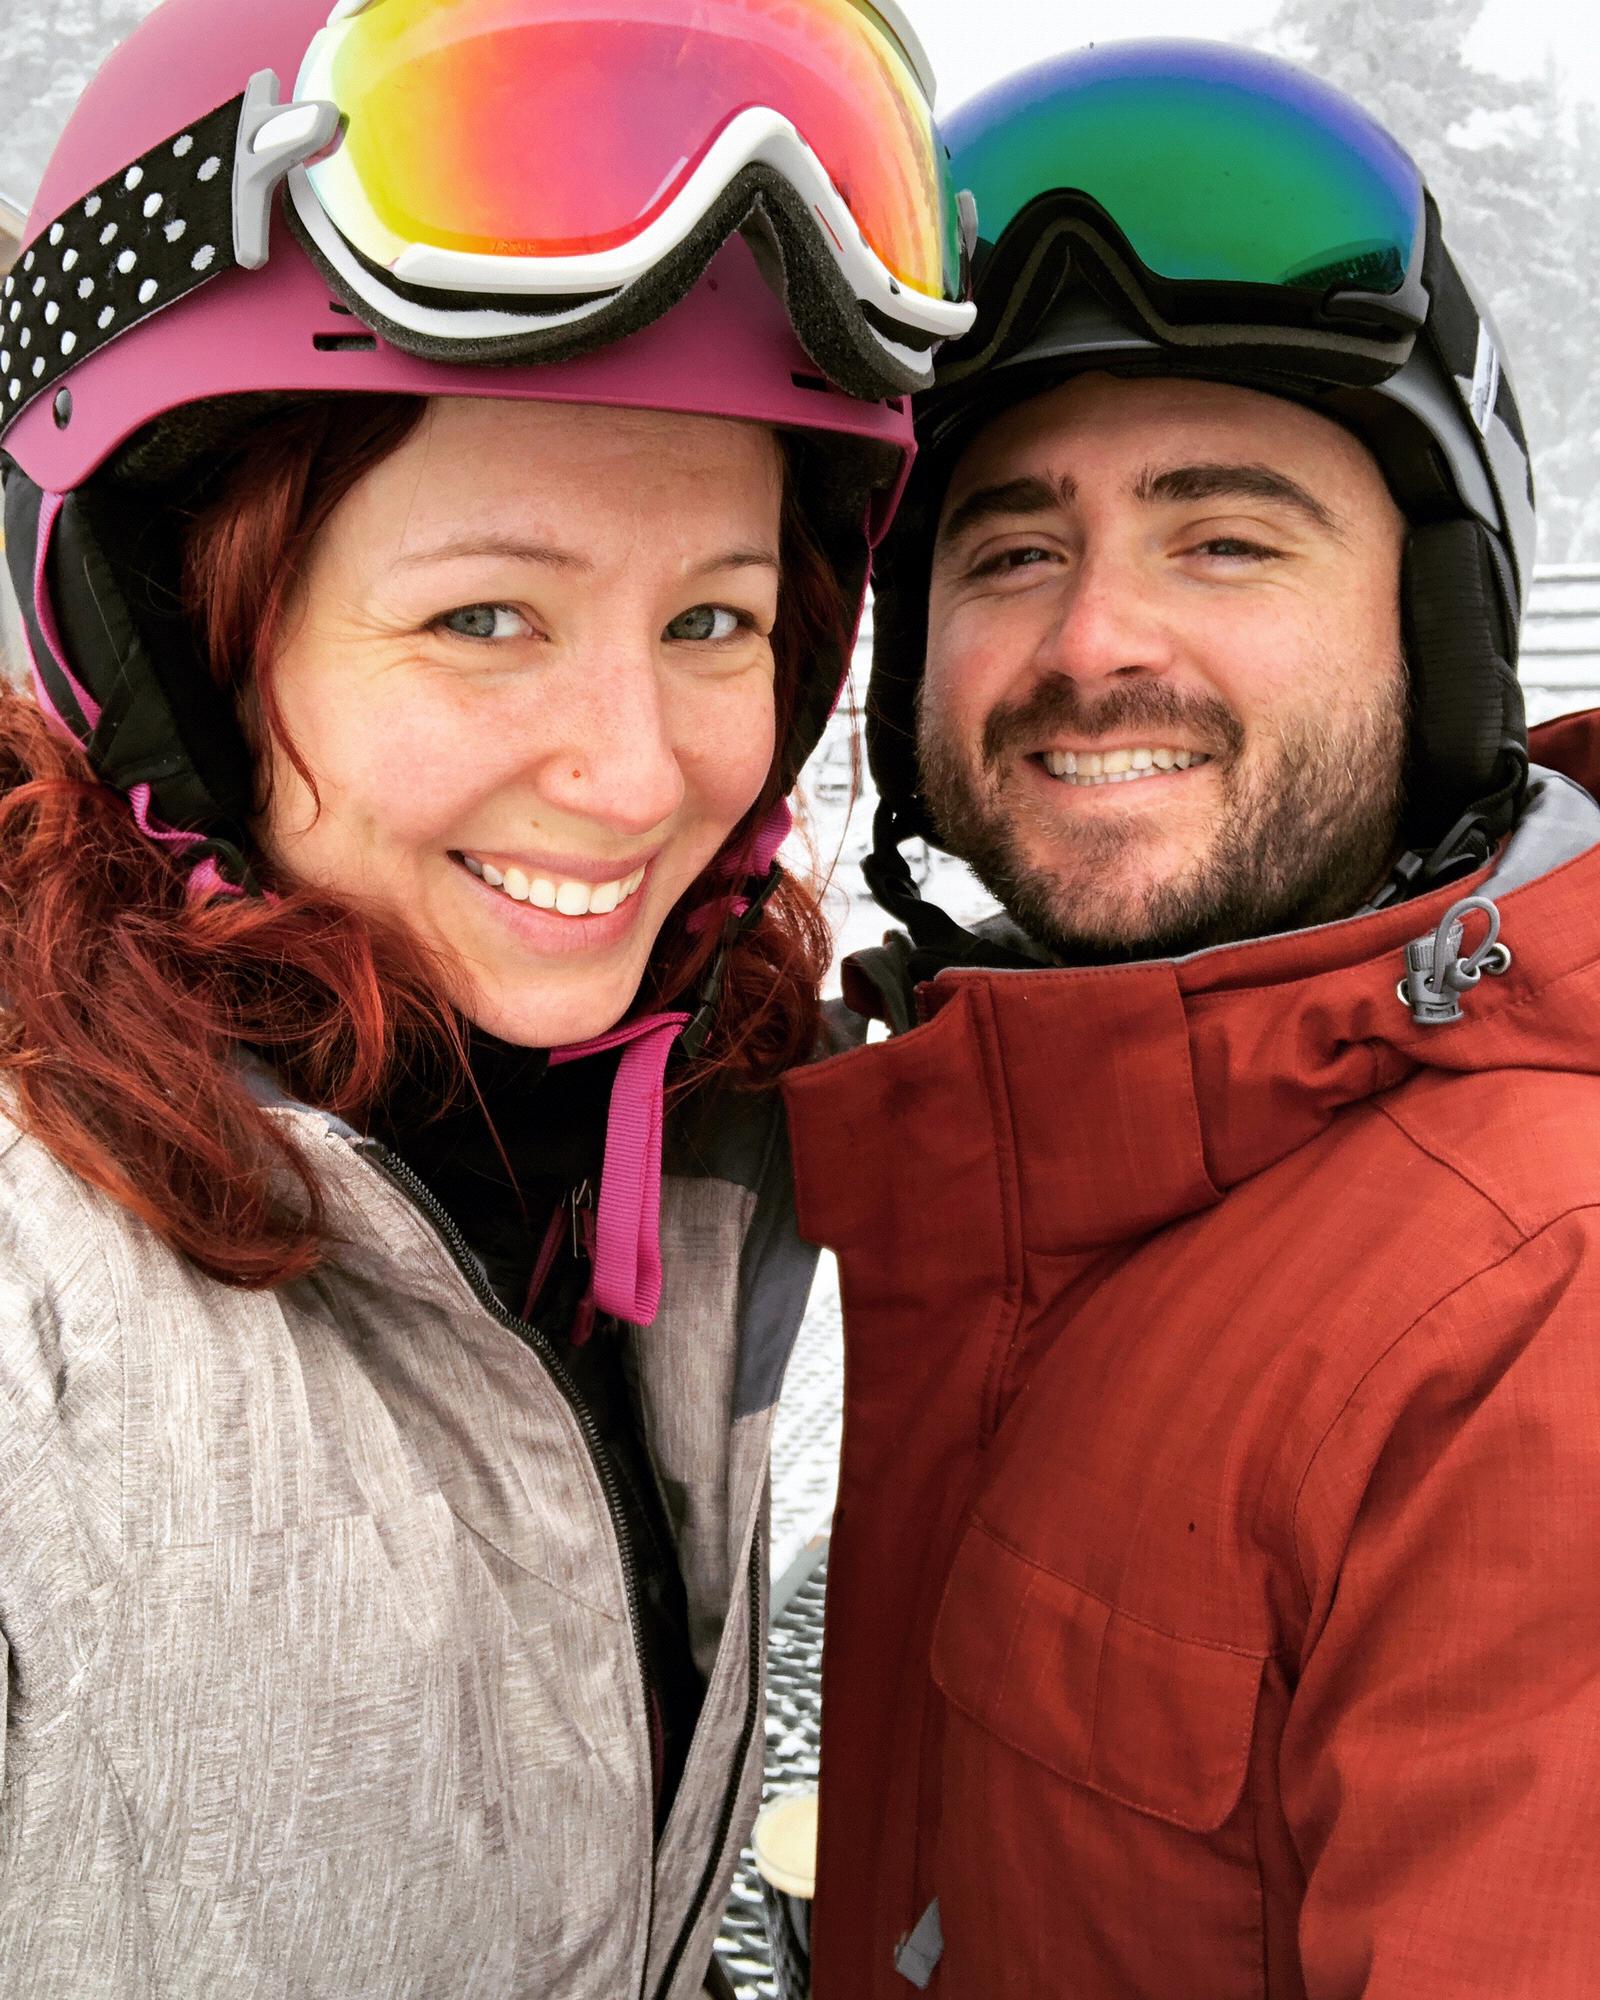 Fun Fact: Kyle taught Meghan how to Ski!